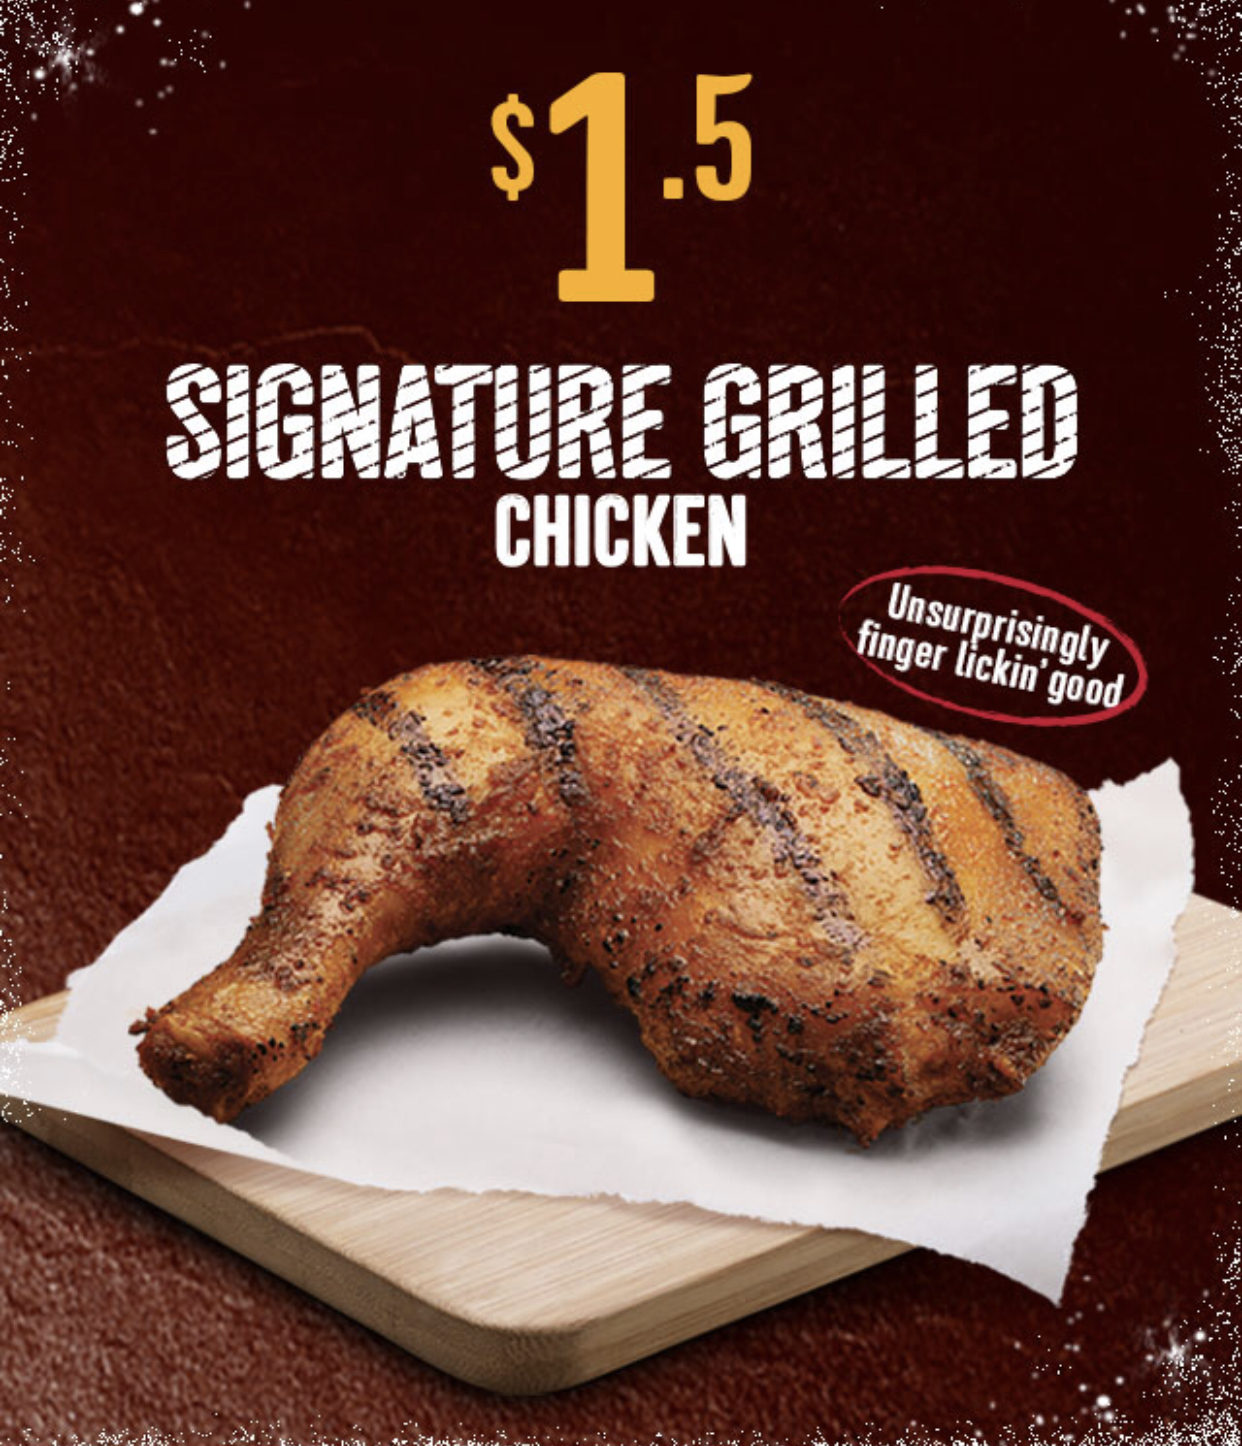 DBS/POSB Cardmembers enjoy $1.50 KFC Signature Fried Chicken from 8 ...